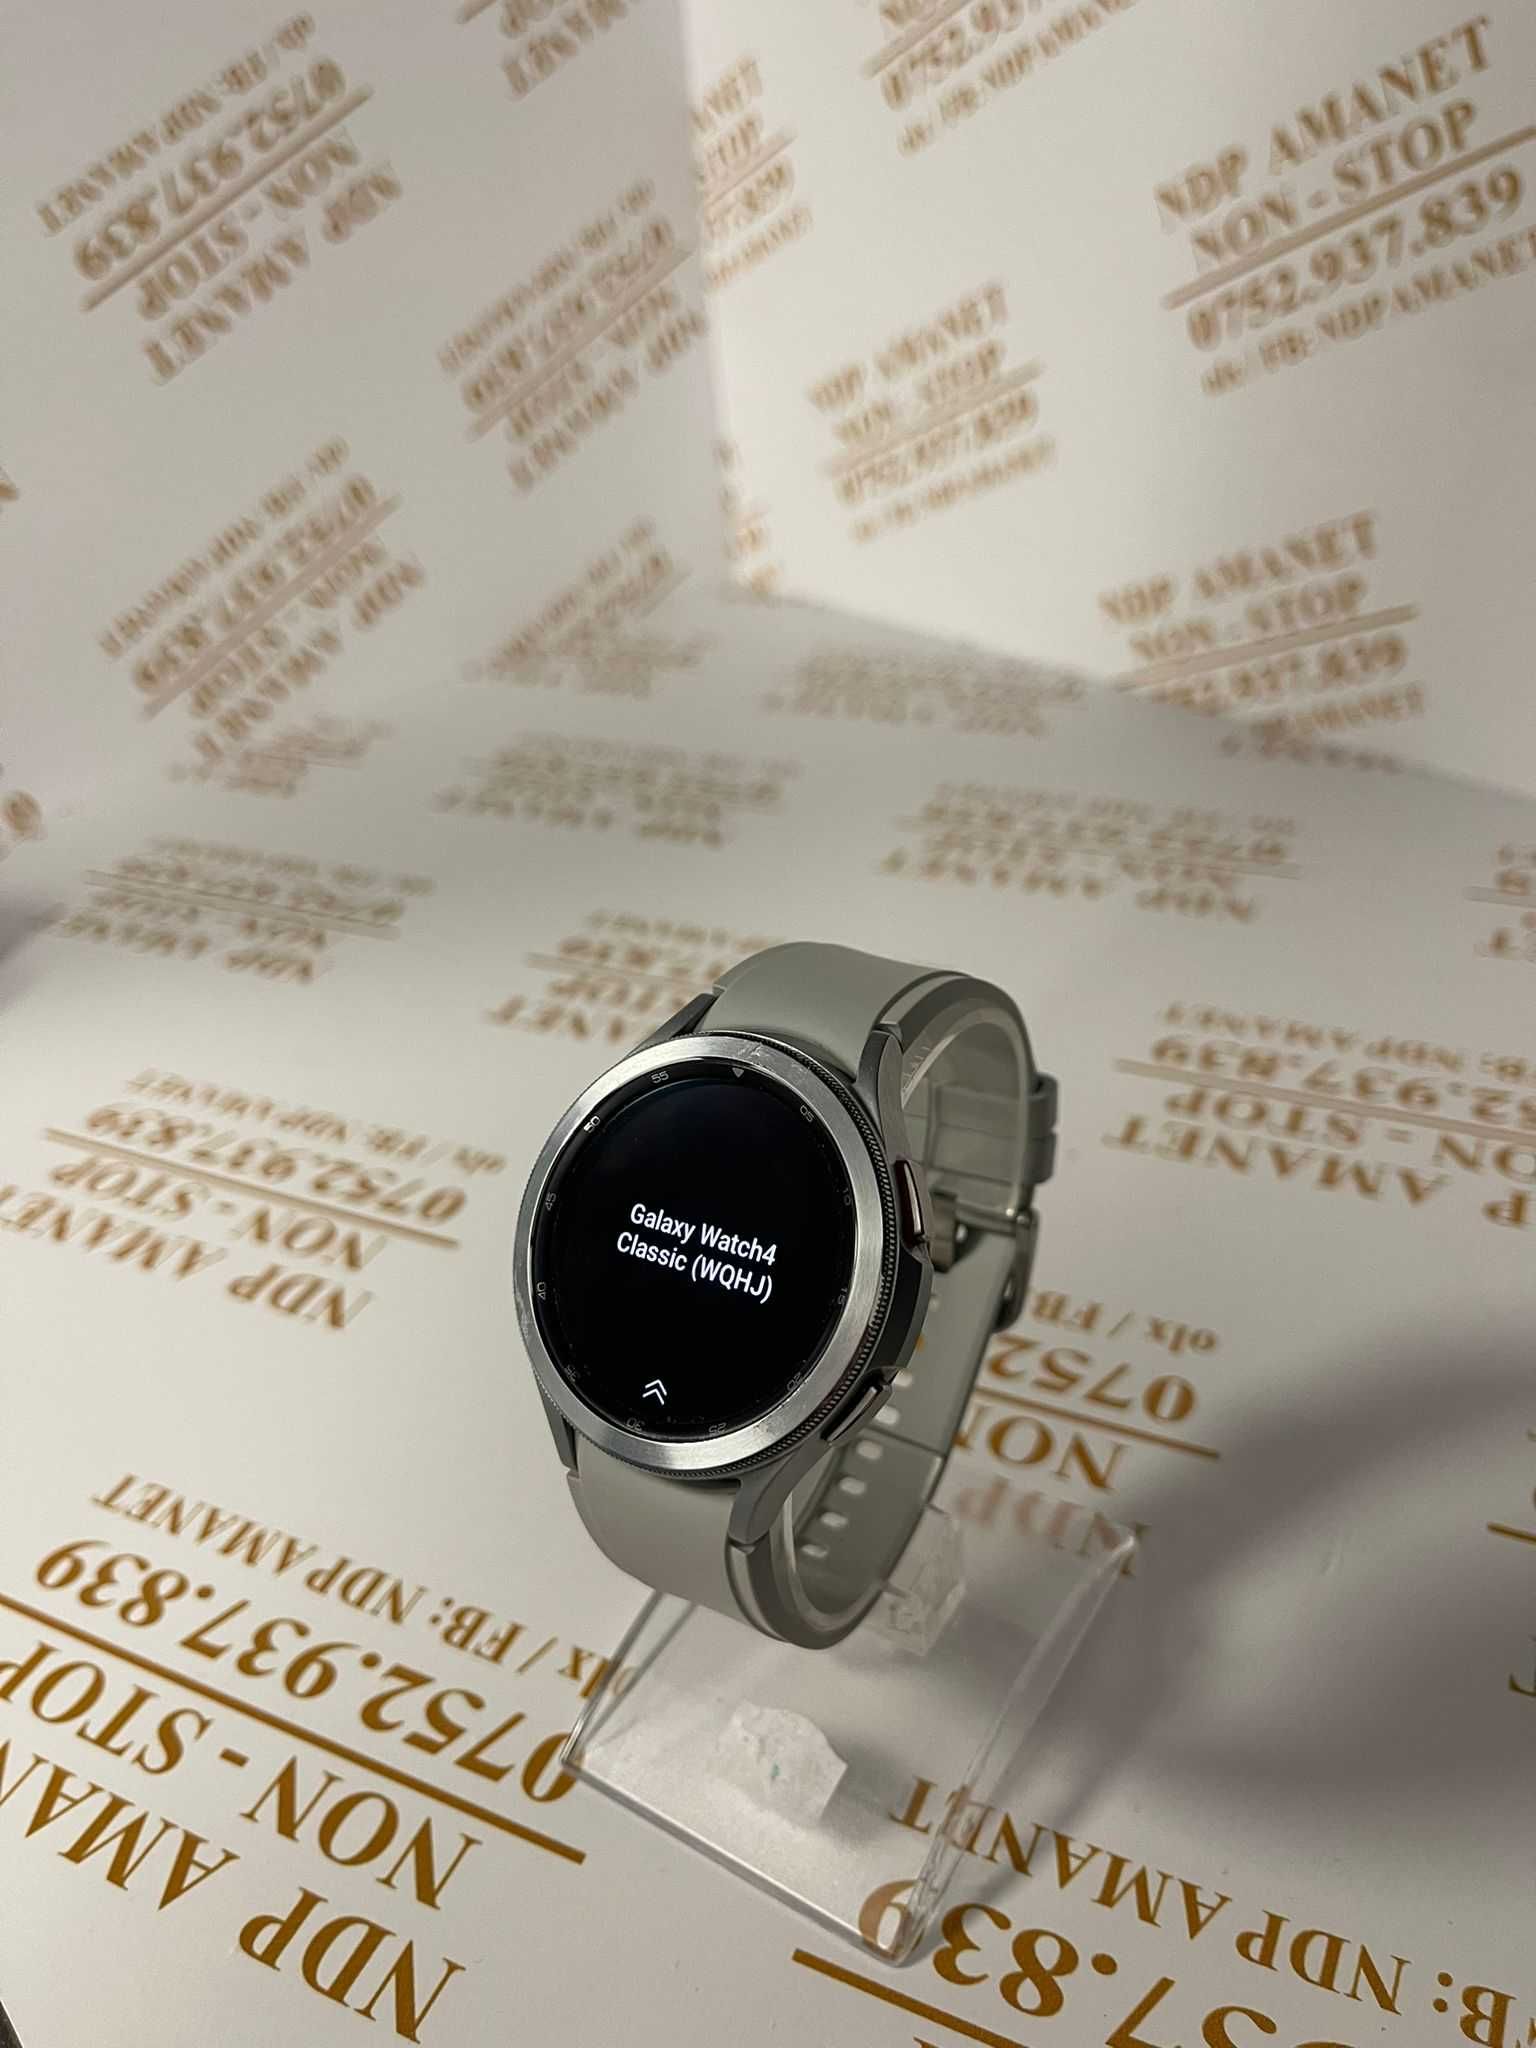 NDP Amanet NON-STOP Bld.Iuliu Maniu nr. 69 Samsung Galaxy Watch 4(919)